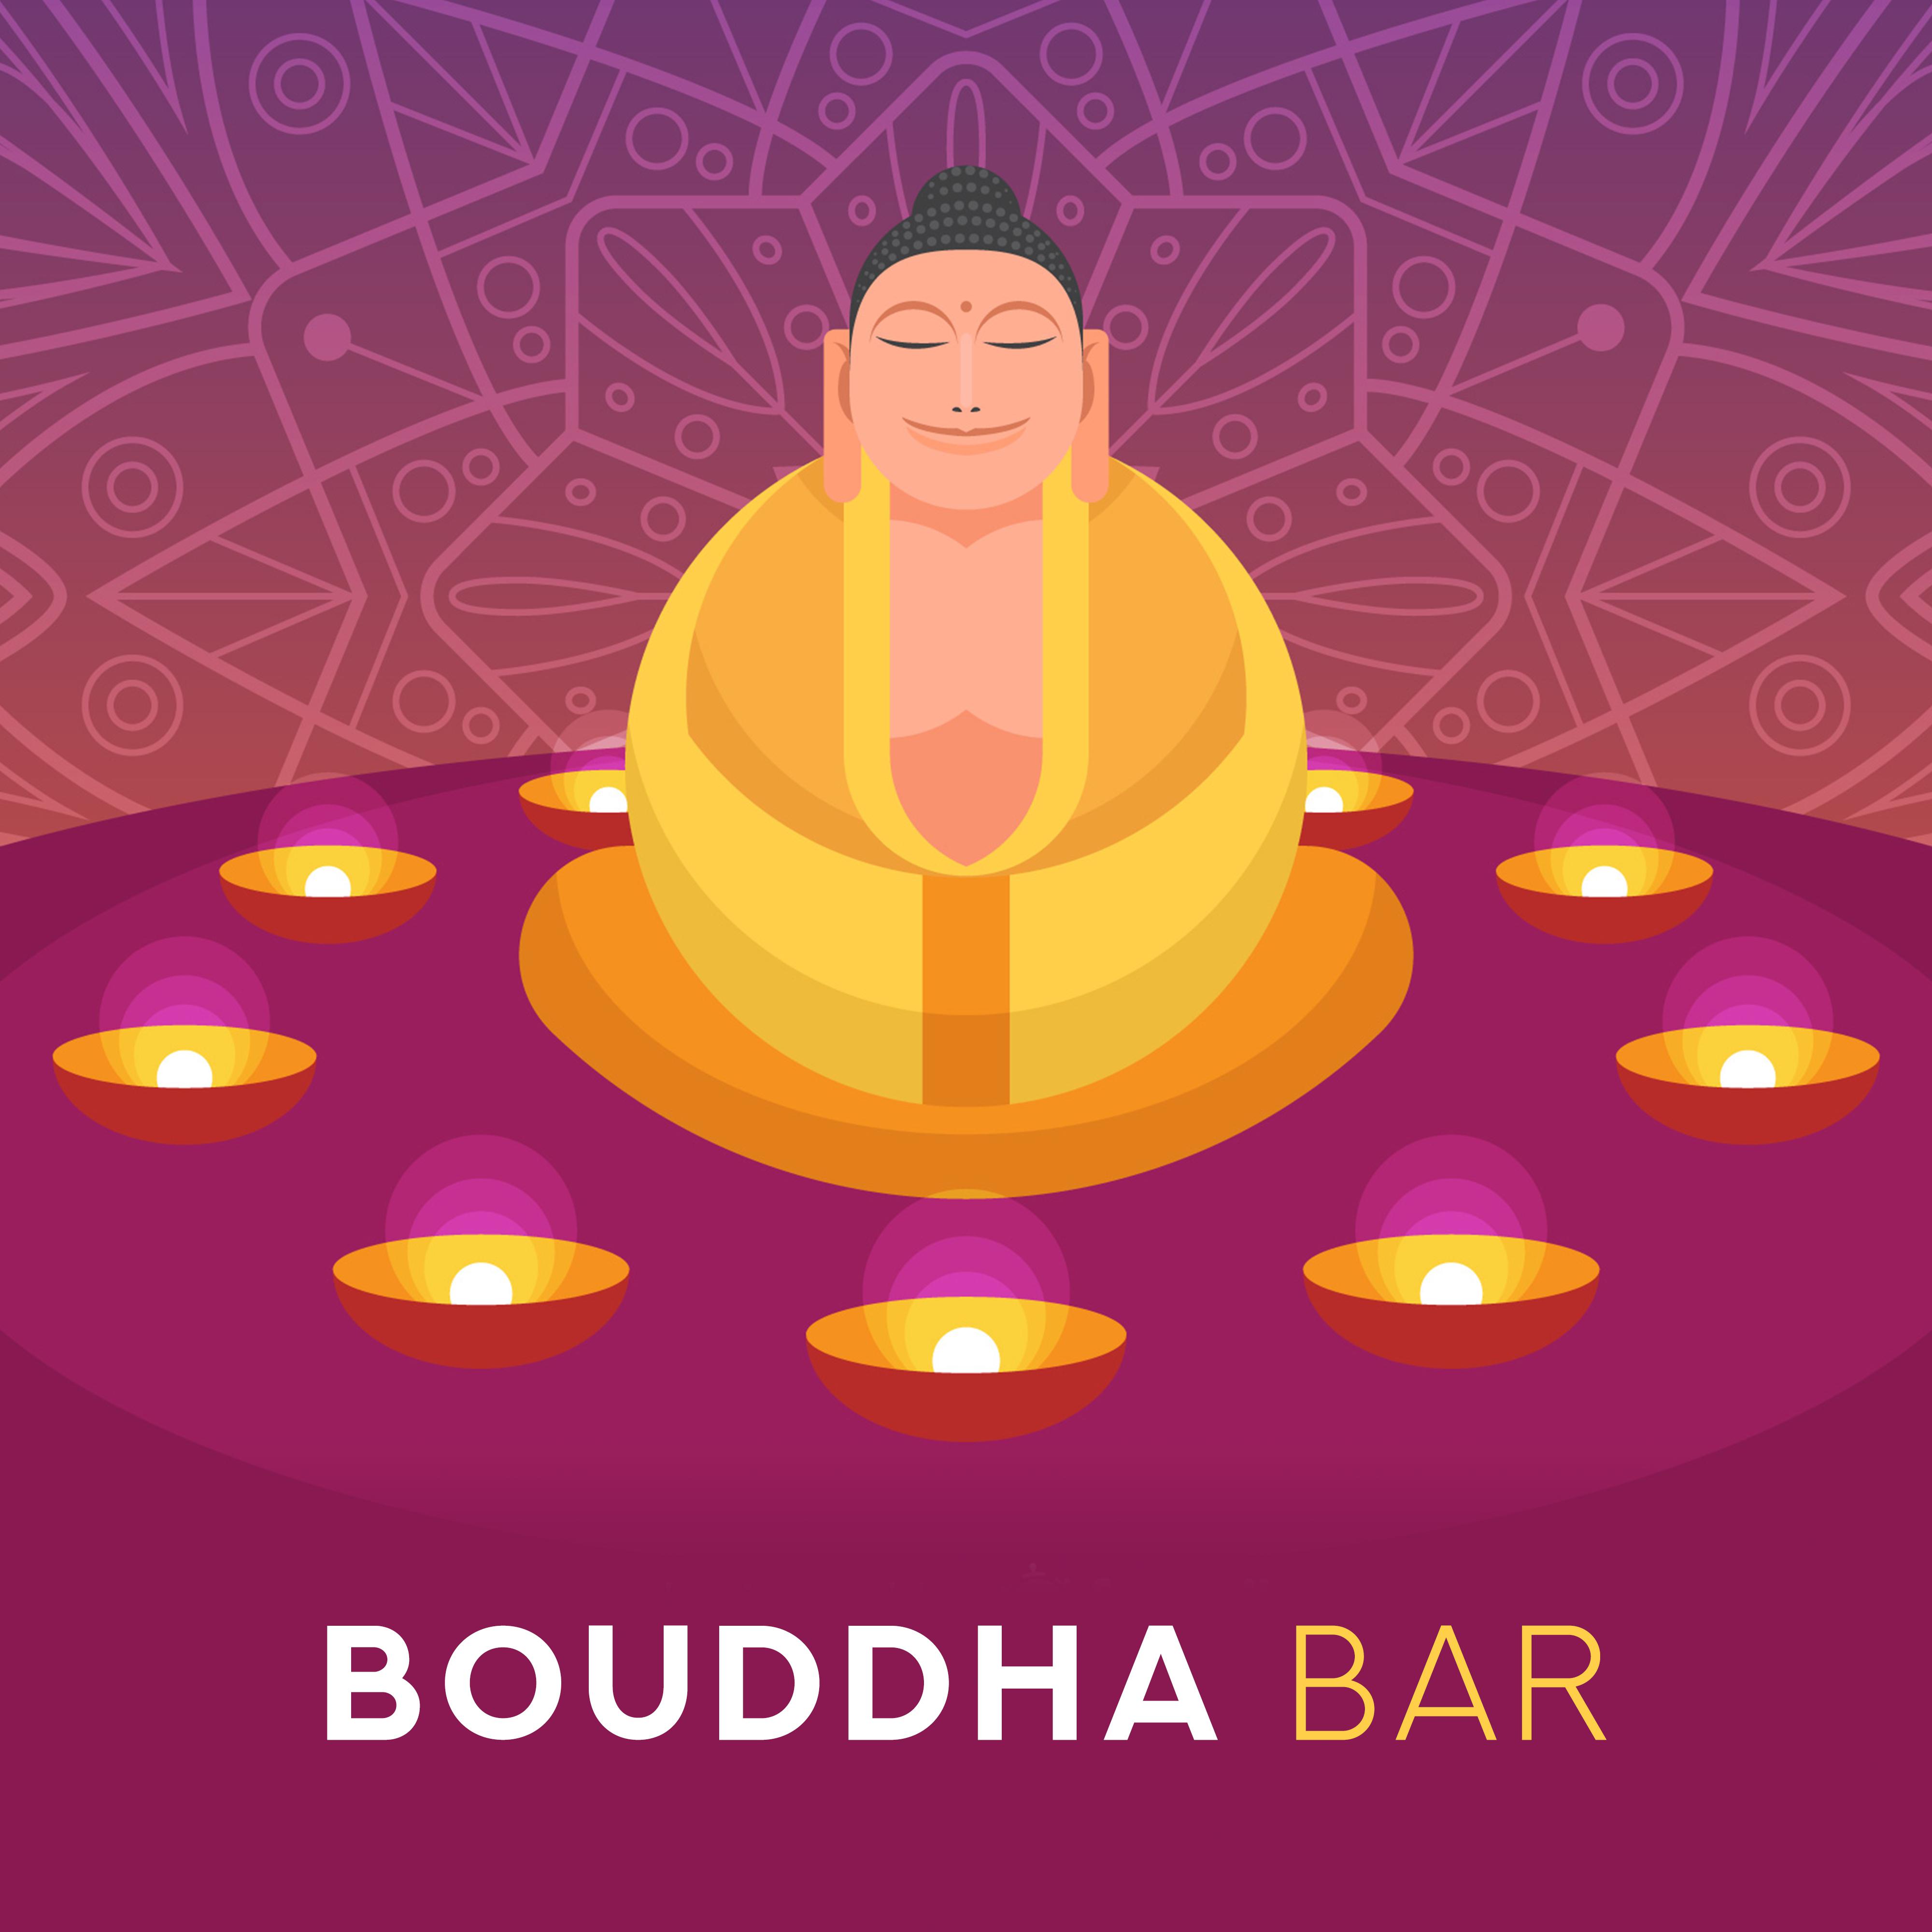 Bouddha bar: Me ditation profonde, Yoga ambiant, Zen, Lounge, Relaxation